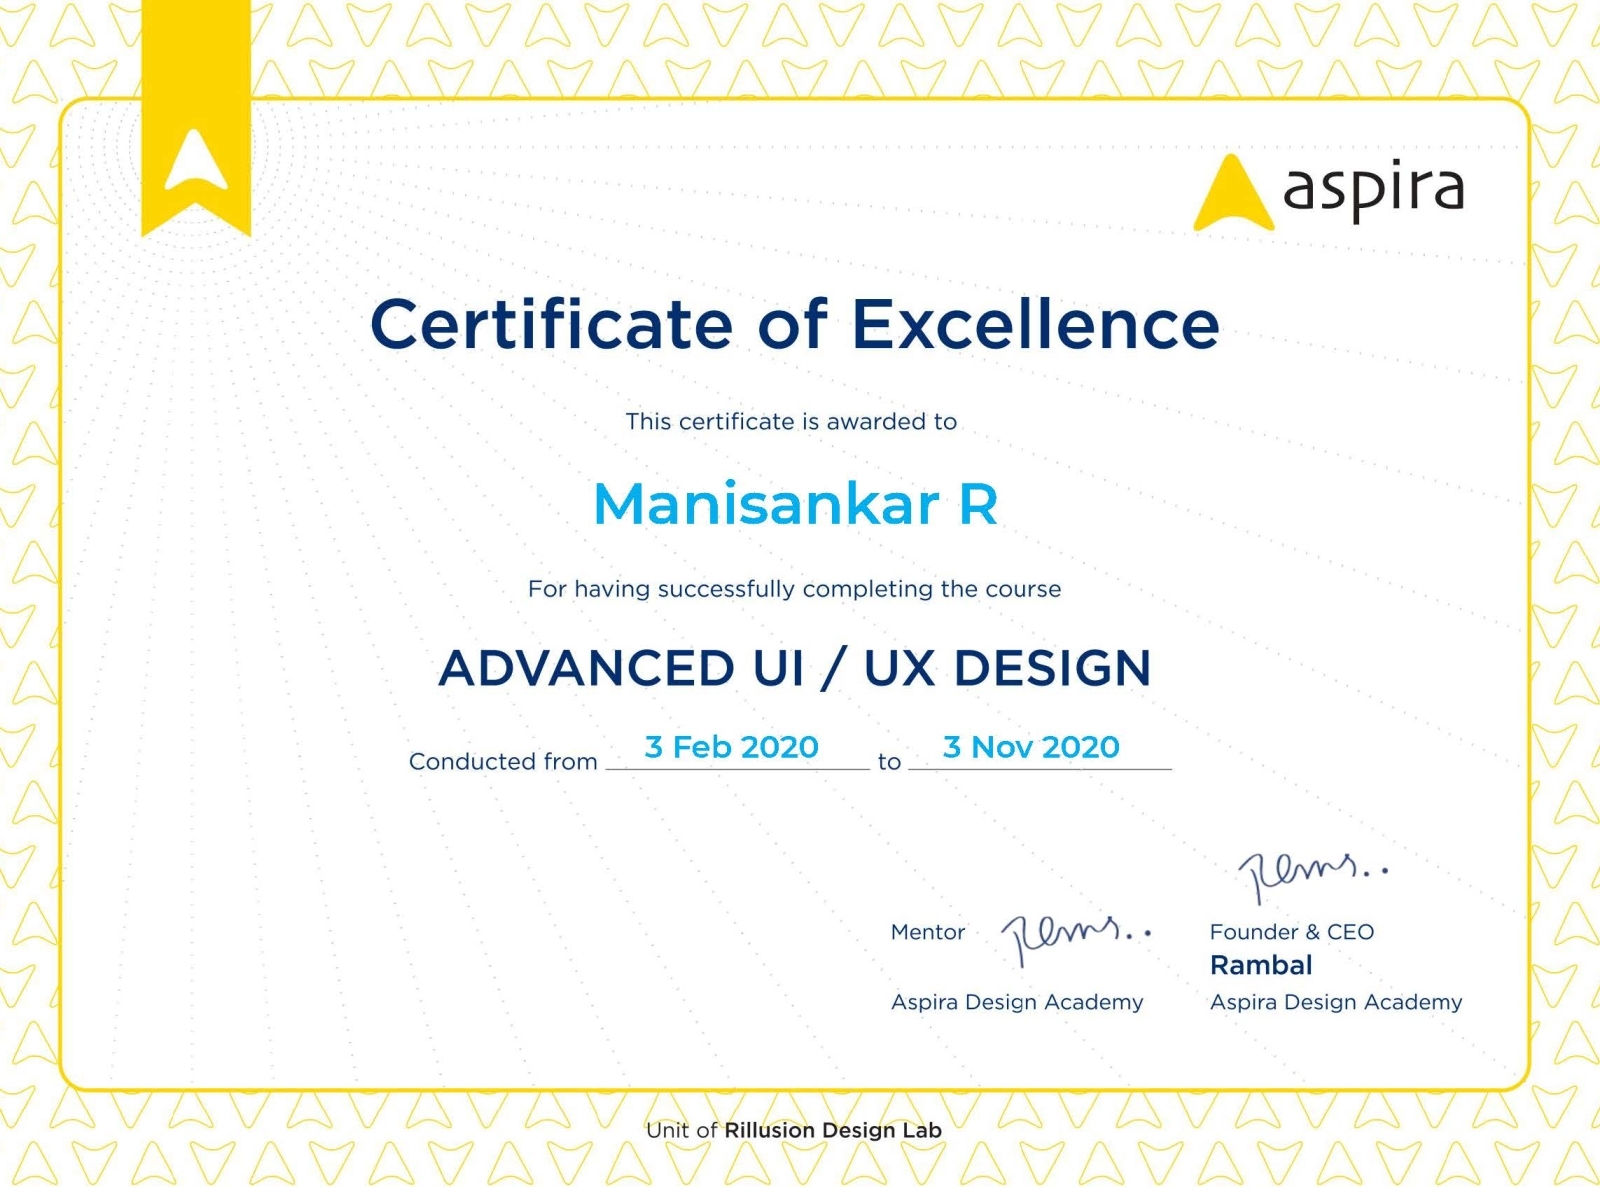 Certificate of Advanced UI /UX Design by Manisankar R on Dribbble